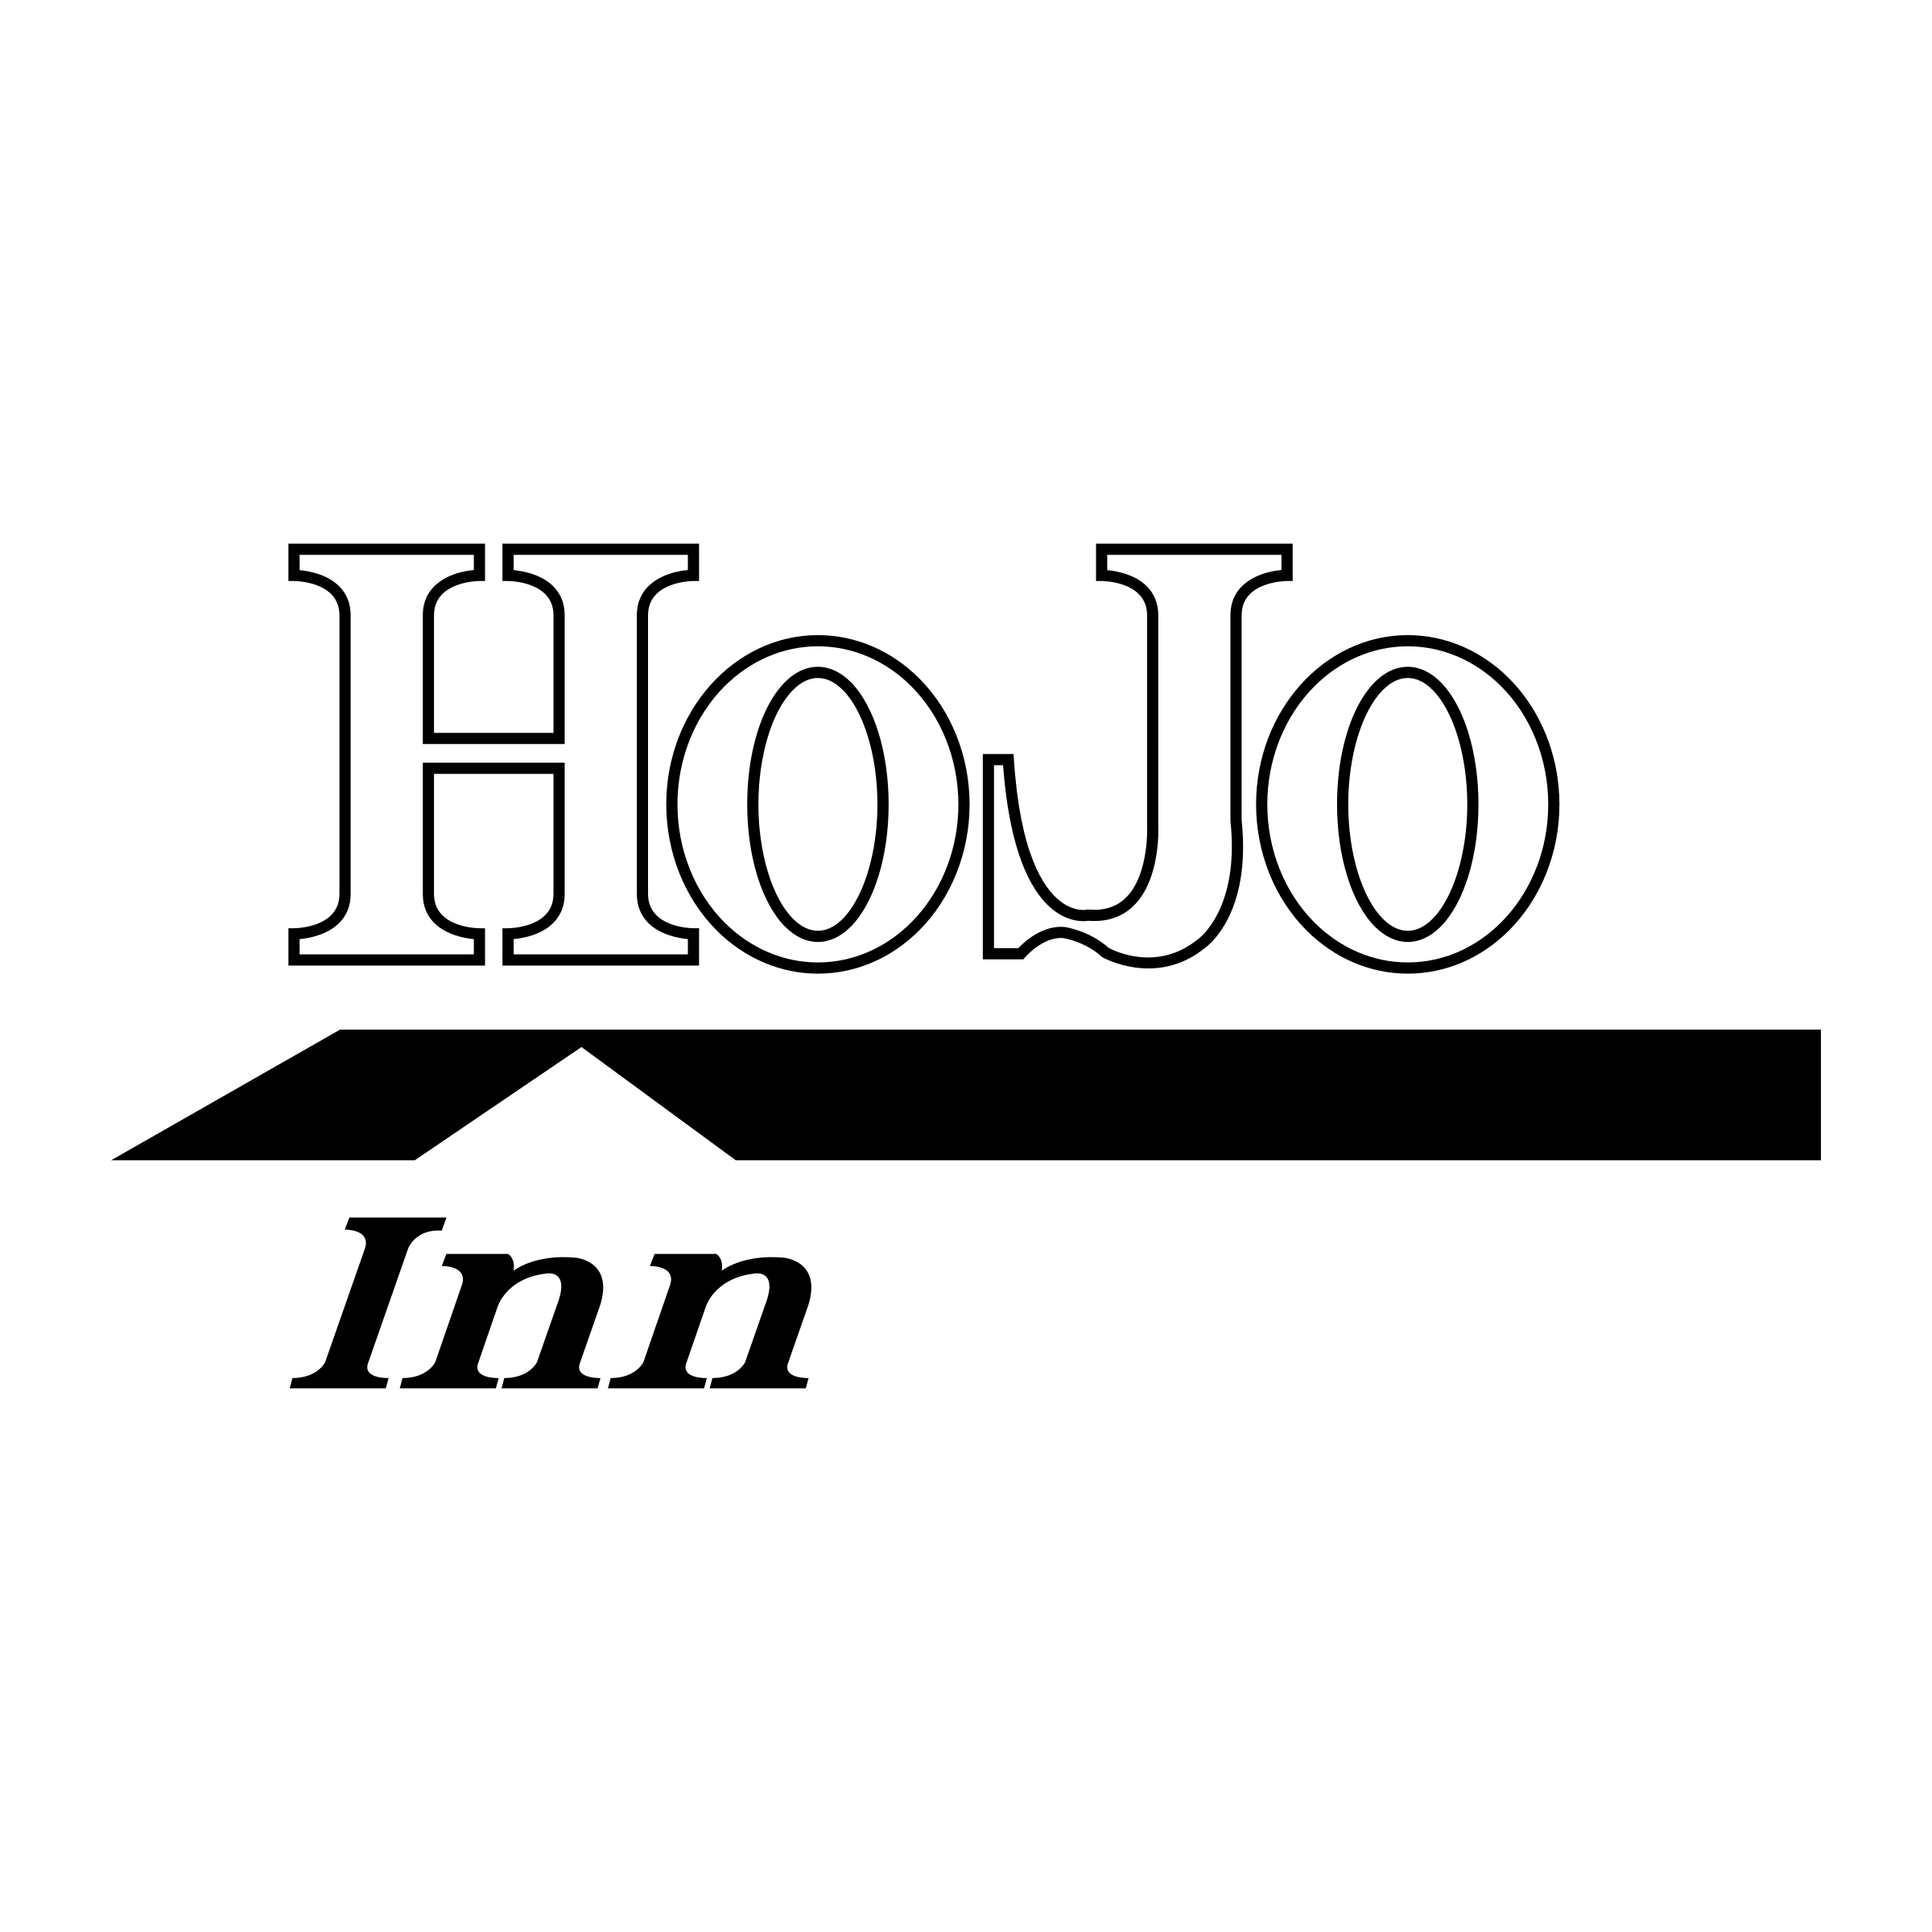 Hojo Logo - HoJo Inn Logo PNG Transparent & SVG Vector